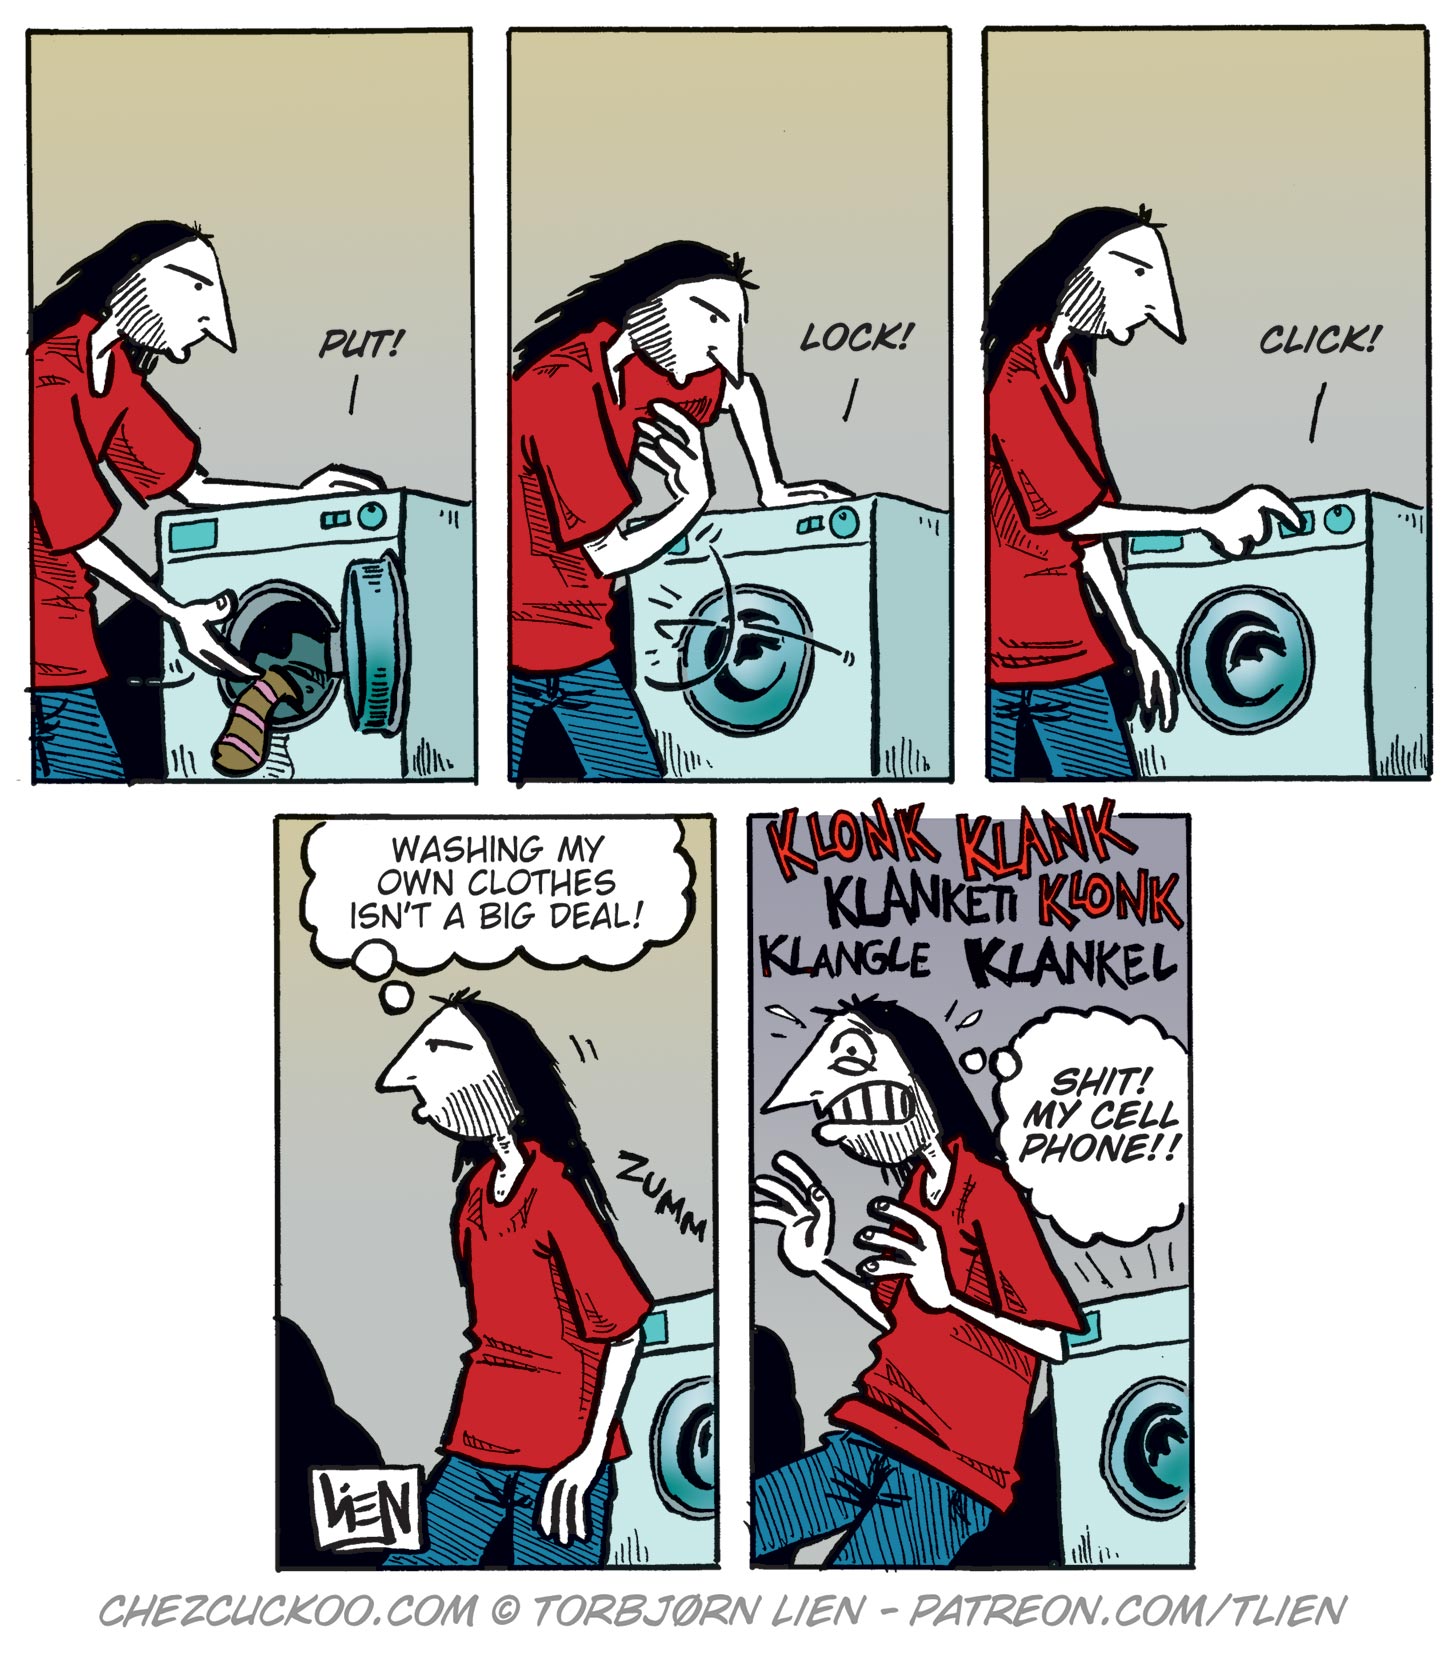 Washing clothes